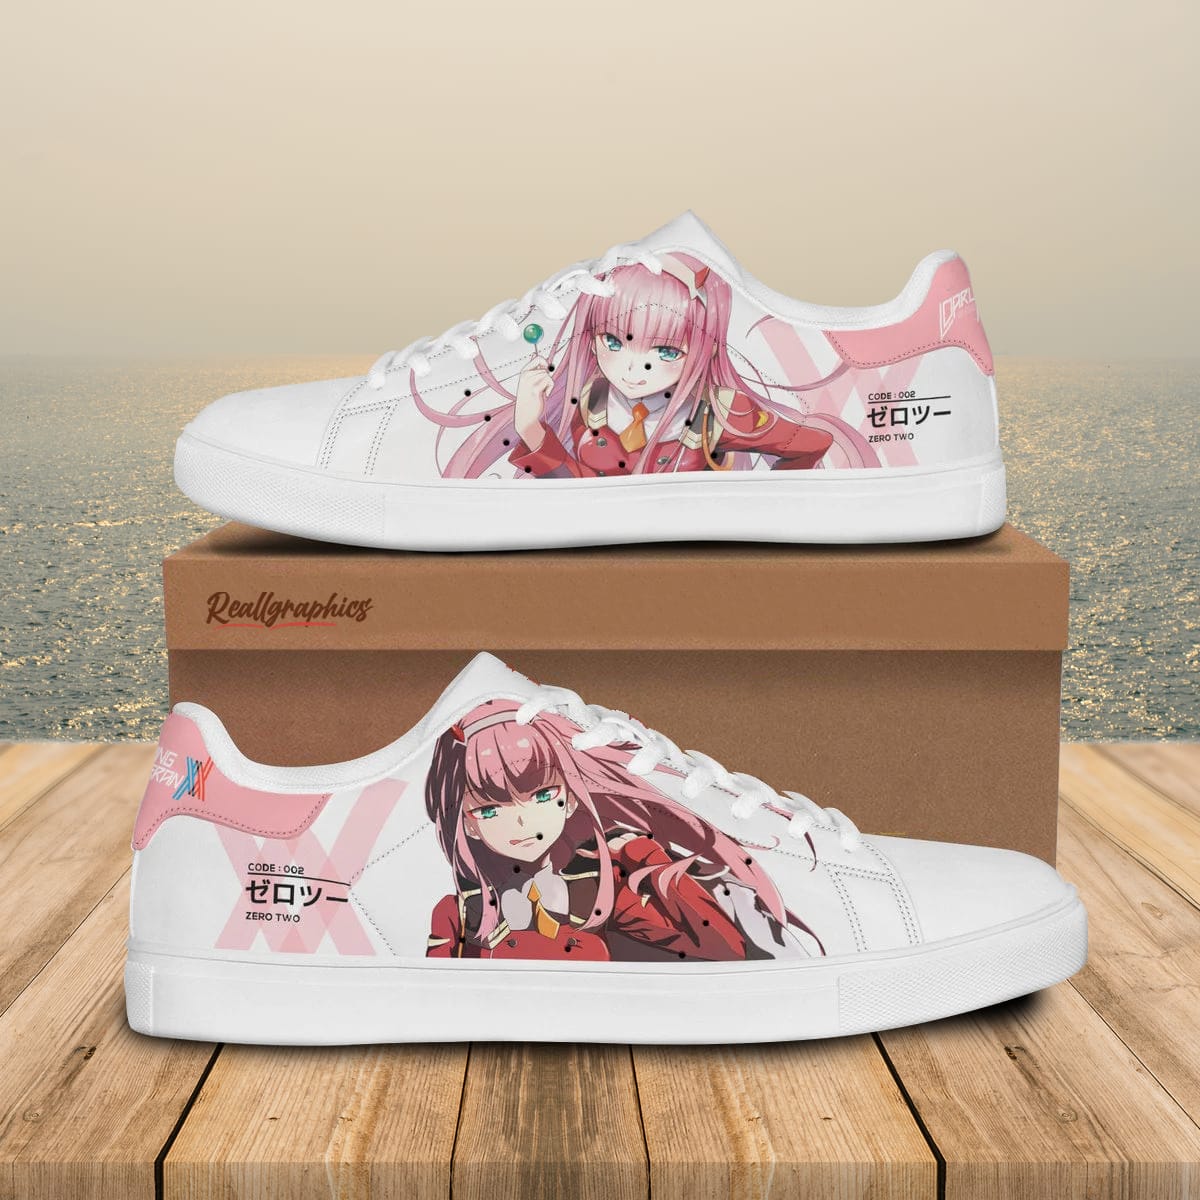 zero two skate sneakers custom darling in the franxx anime shoes